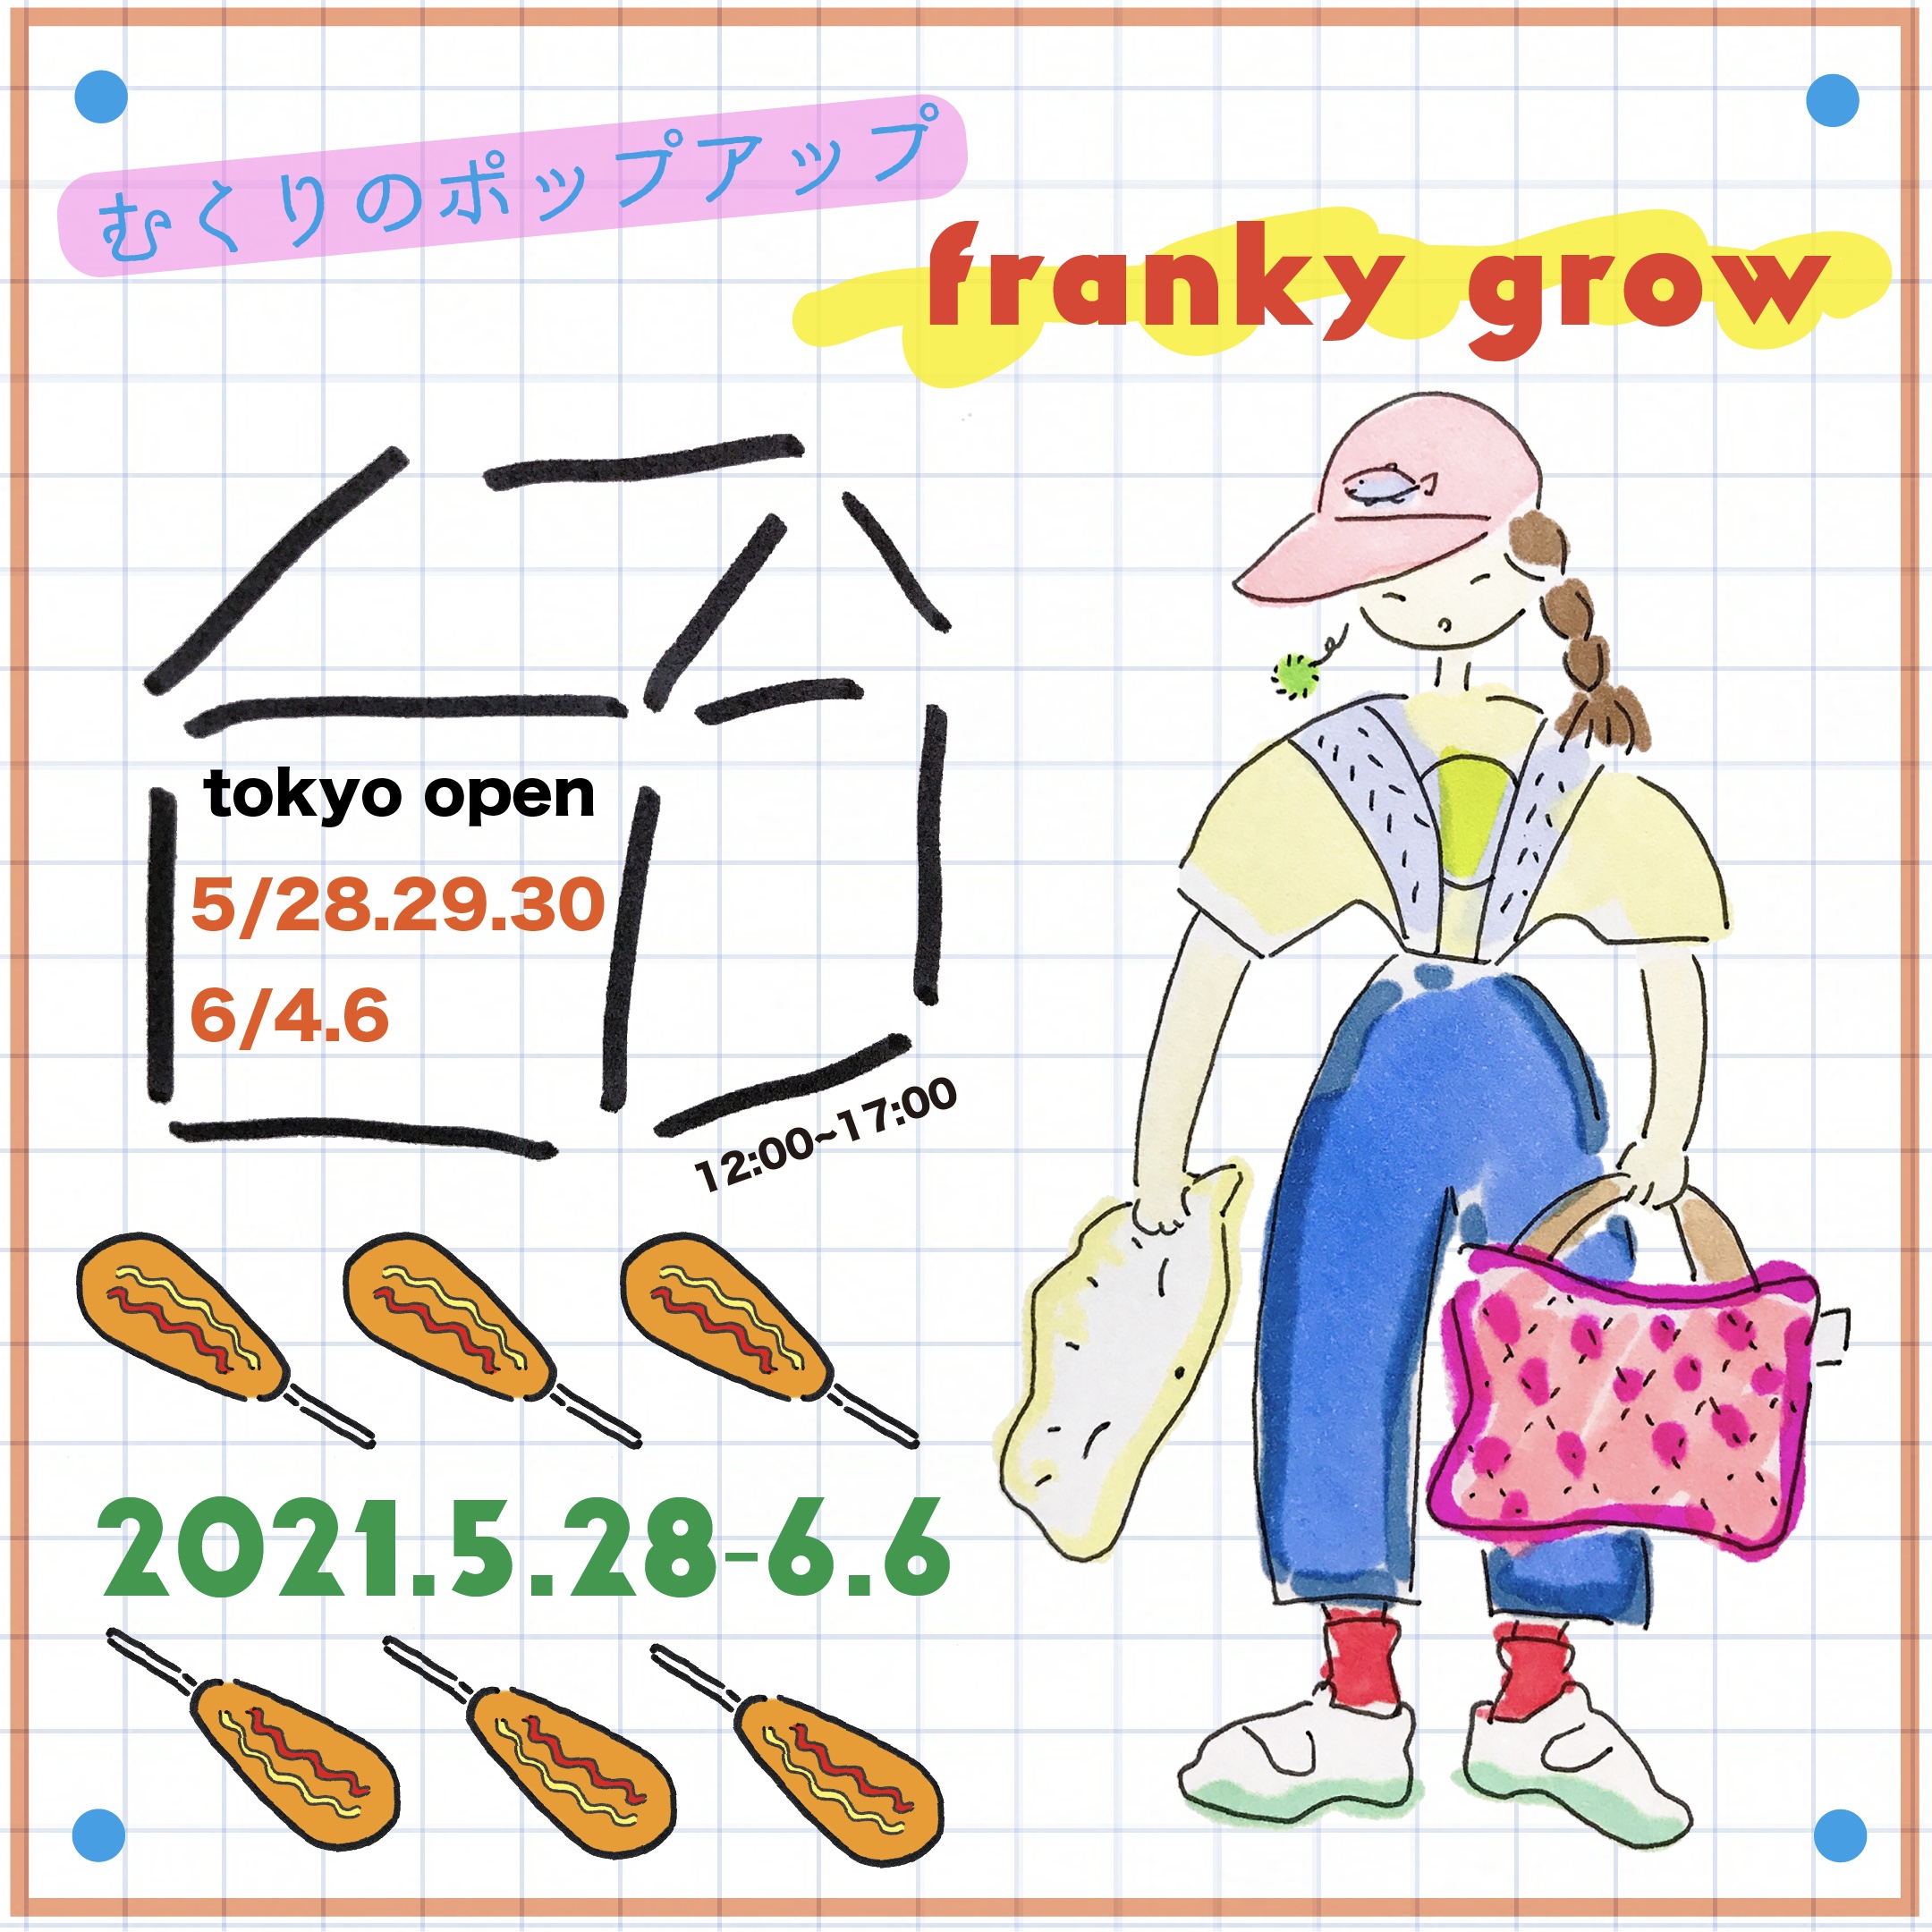 2021.5.28〜6.6 franky grow ポップアップ